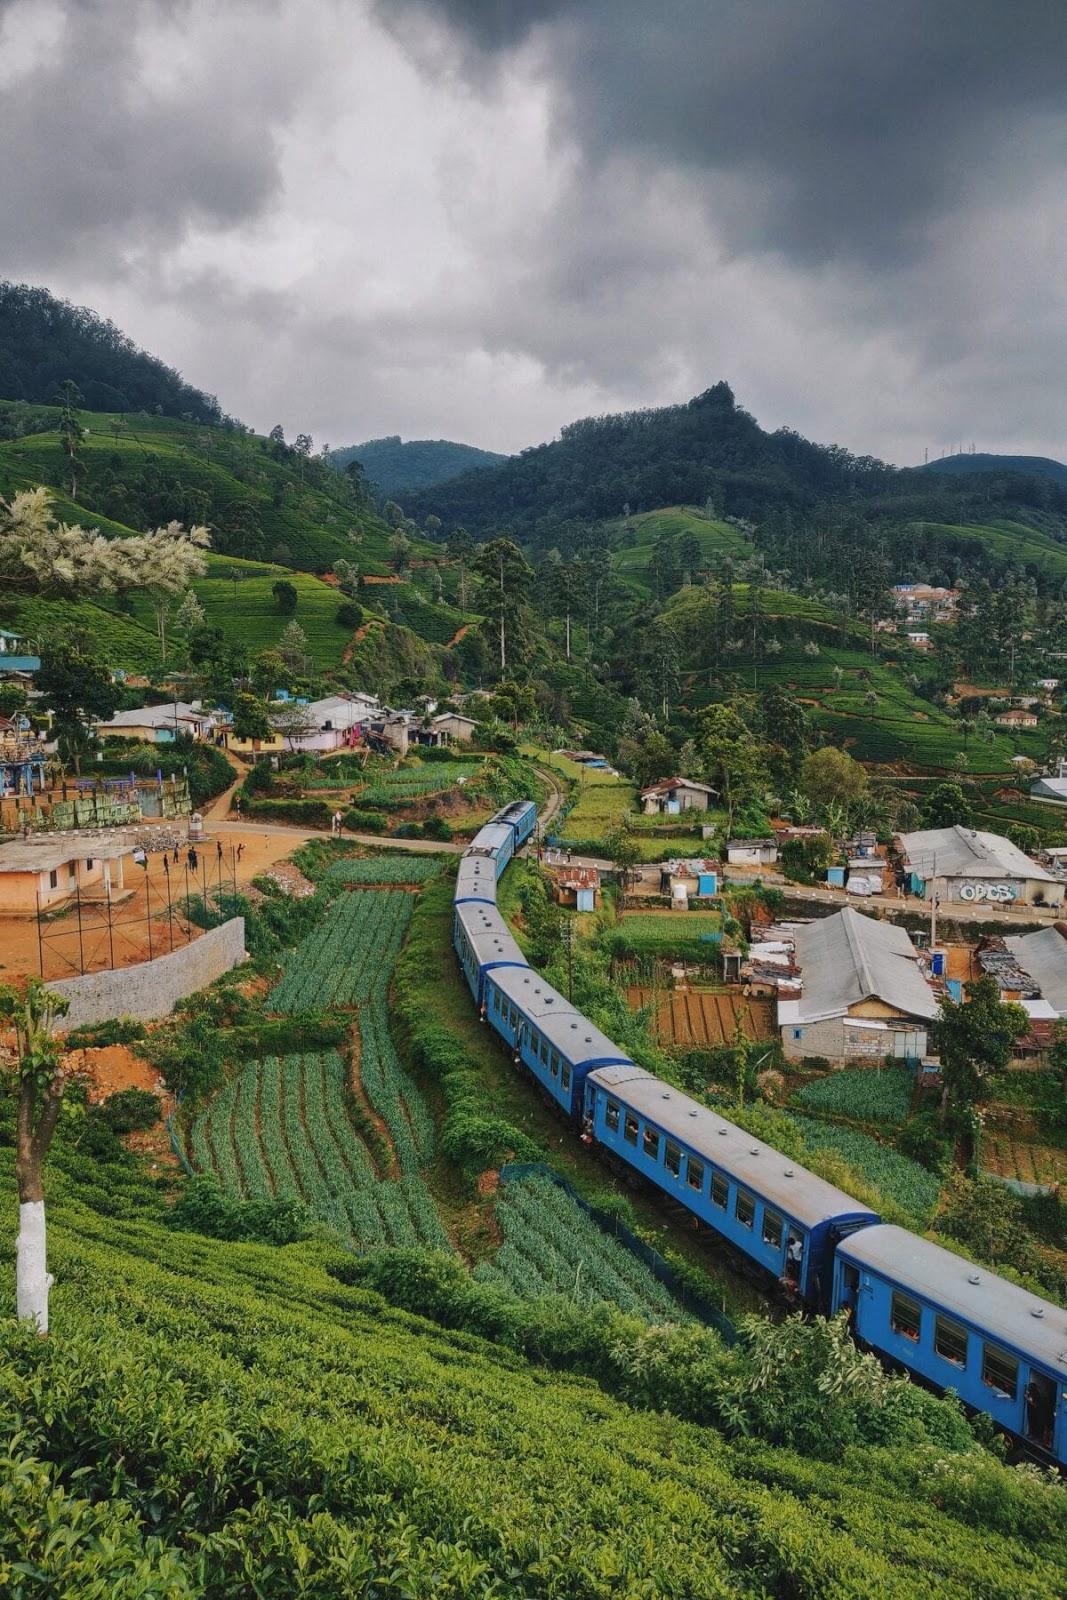 Sri Lanka train passing through village